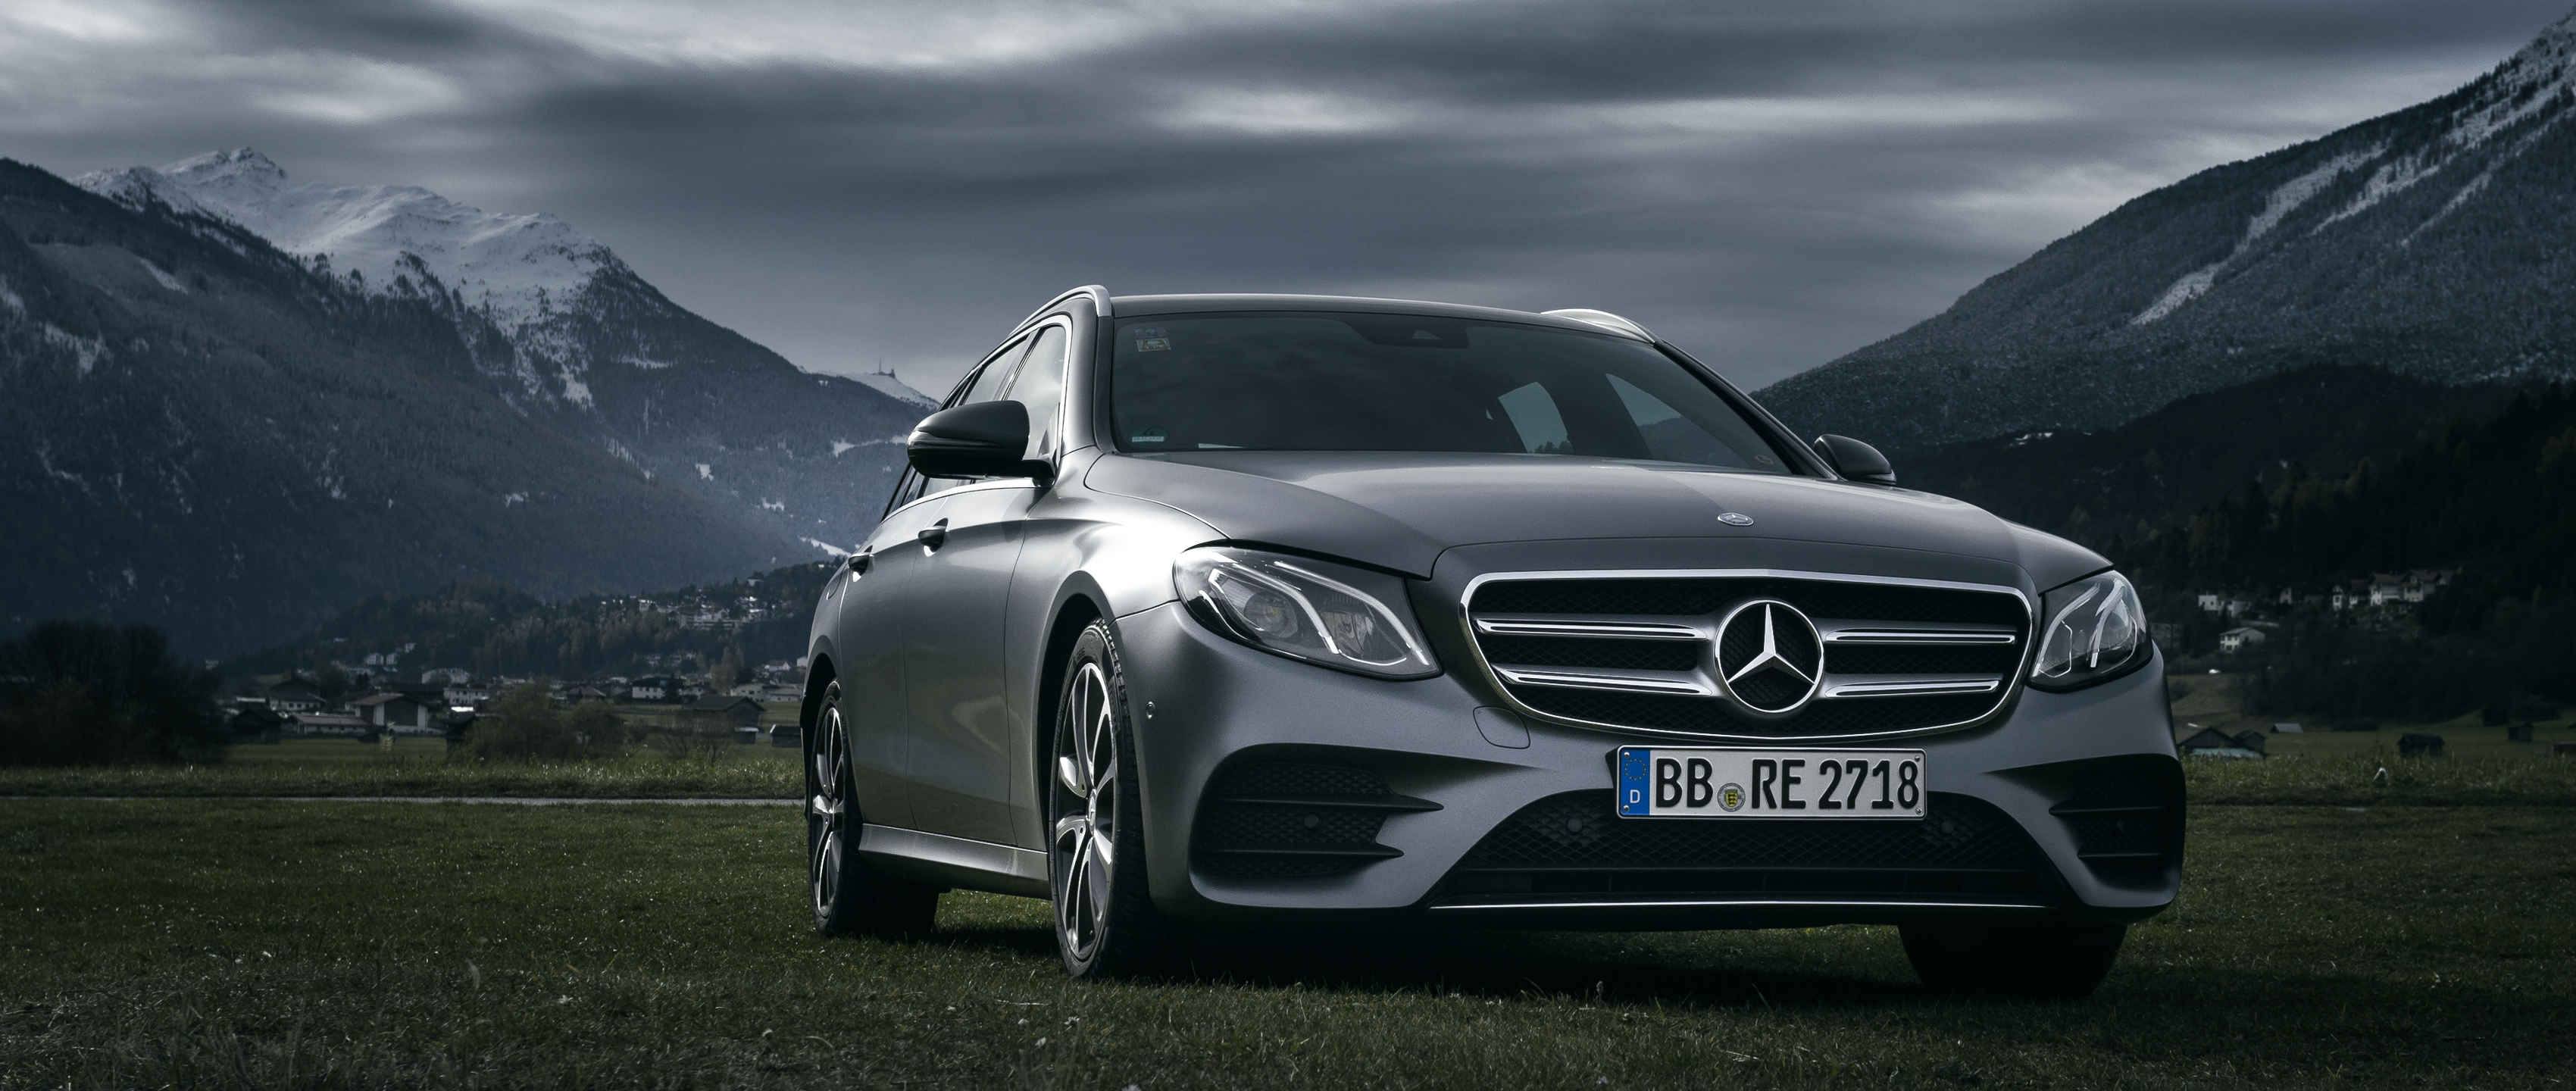 Mercedes-Benz E-Class, Mercedes E200, Auto industry, Luxury cars, 3400x1440 Dual Screen Desktop